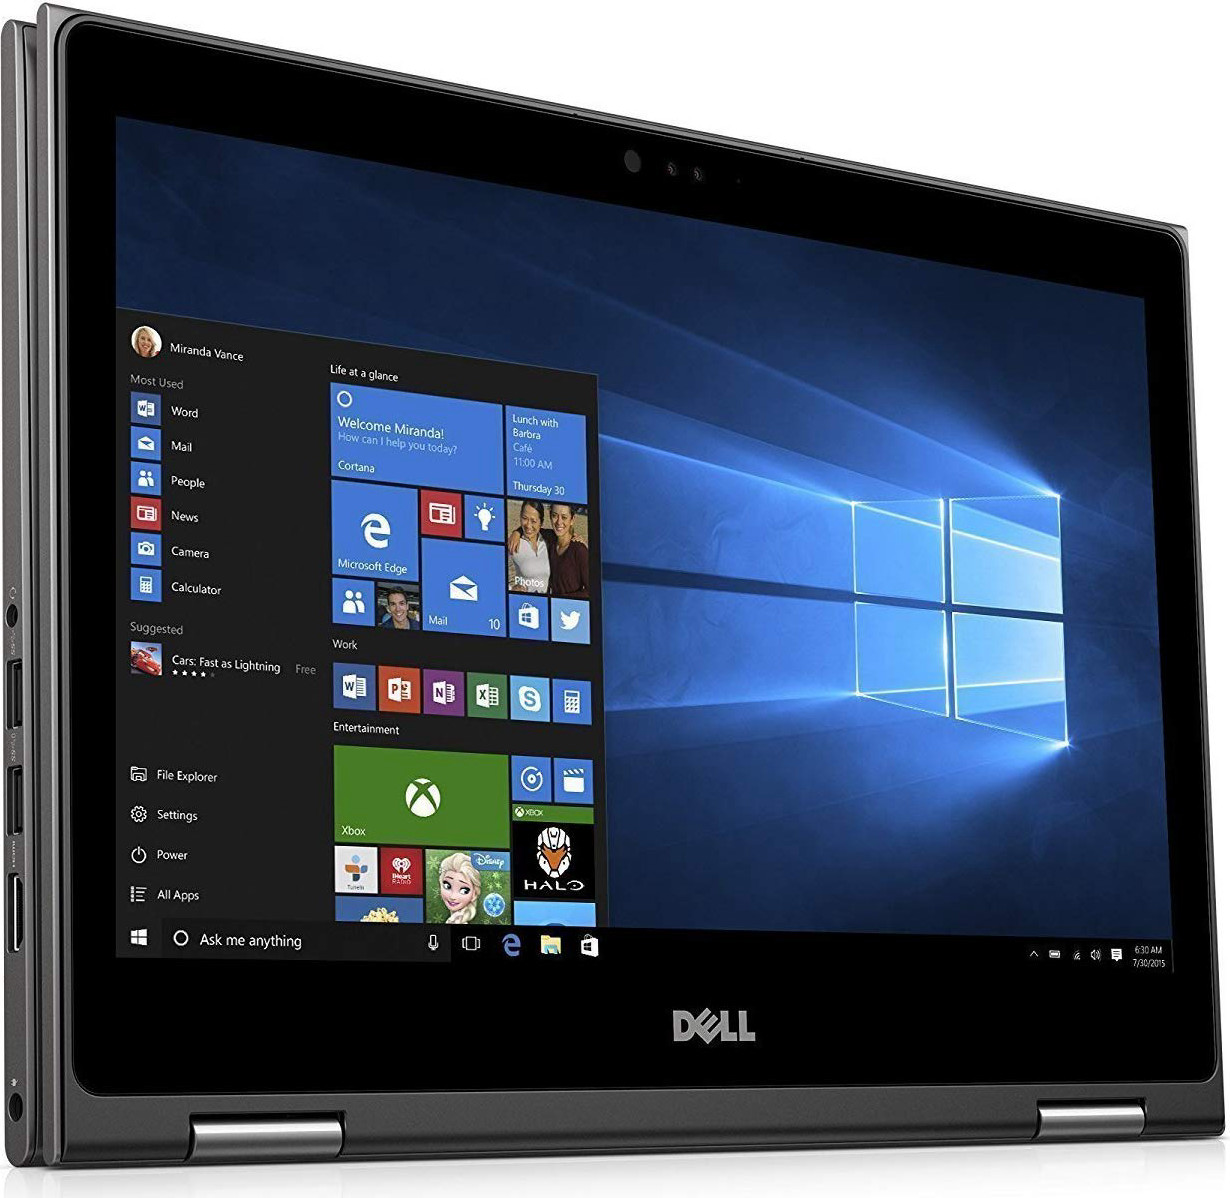 2018 Dell Inspiron 13 5000 5379 2-IN-1 Laptop - 13.3in TouchScreen FHD (1920x1080), 8th Gen Intel Core i7-8550U, 256GB SSD, 8GB DDR4, Backlit, IR Webcam, Windows 10 (Renewed)